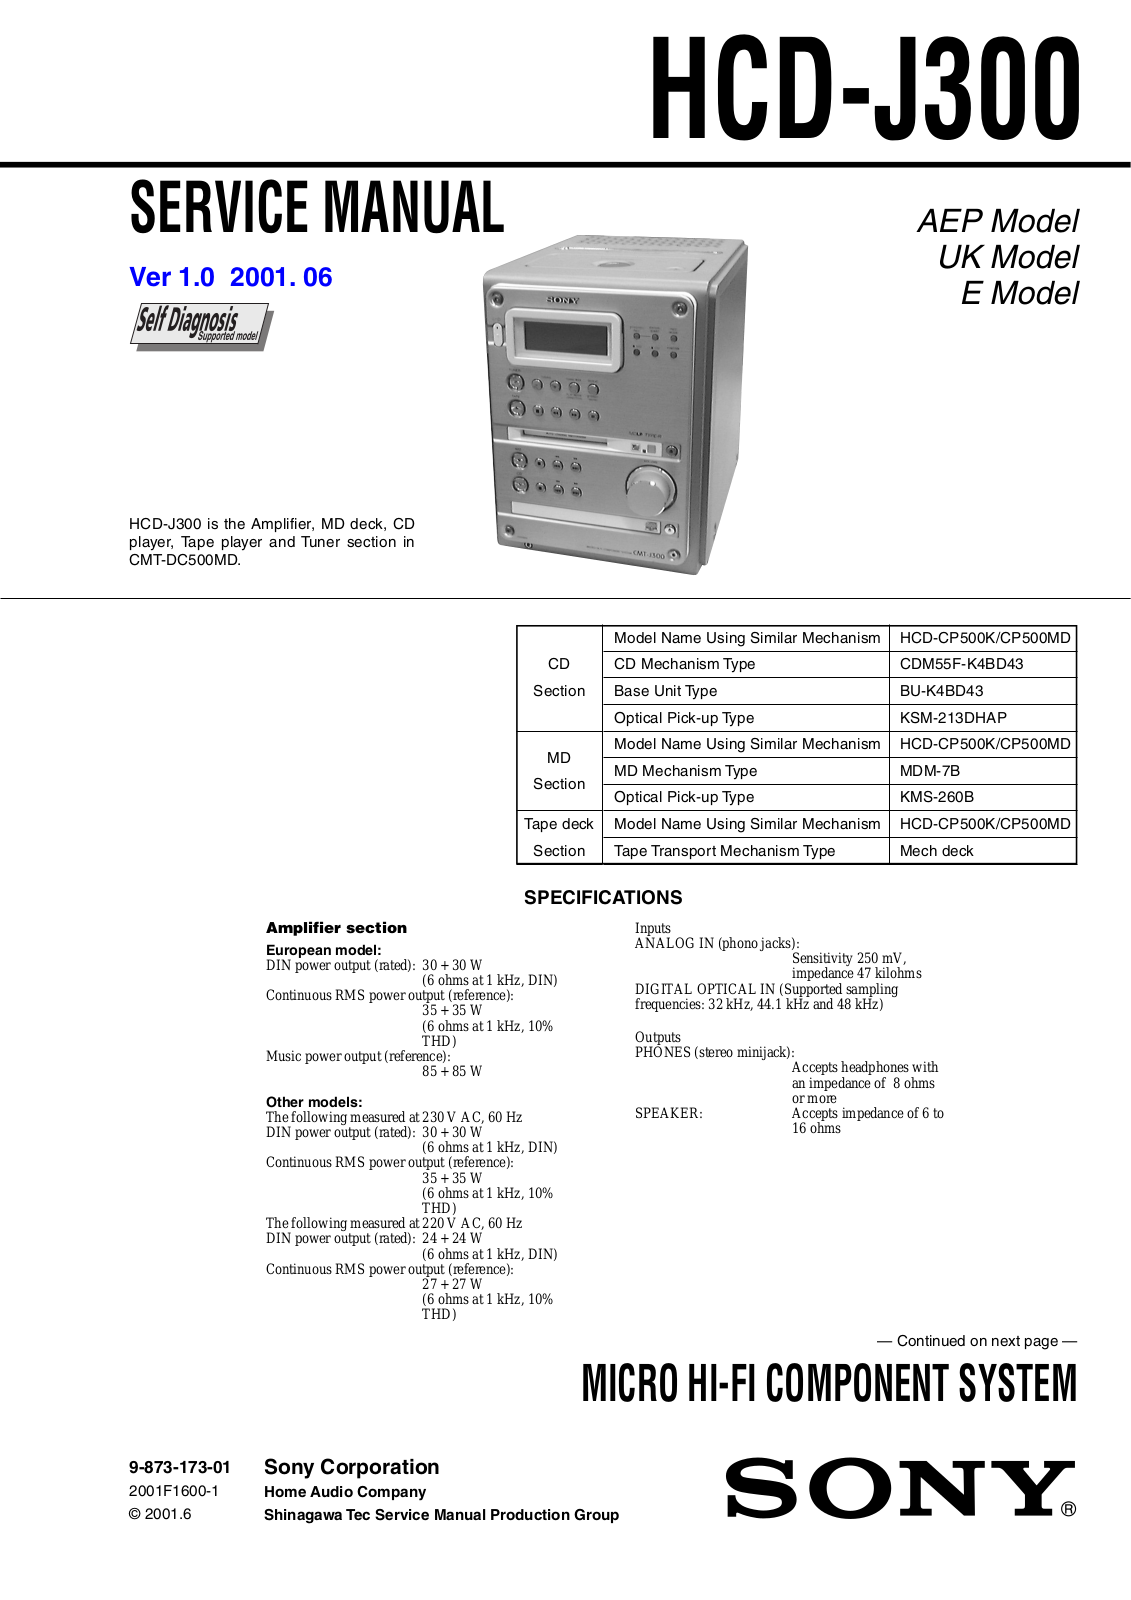 Sony HCD-J300 Service manual